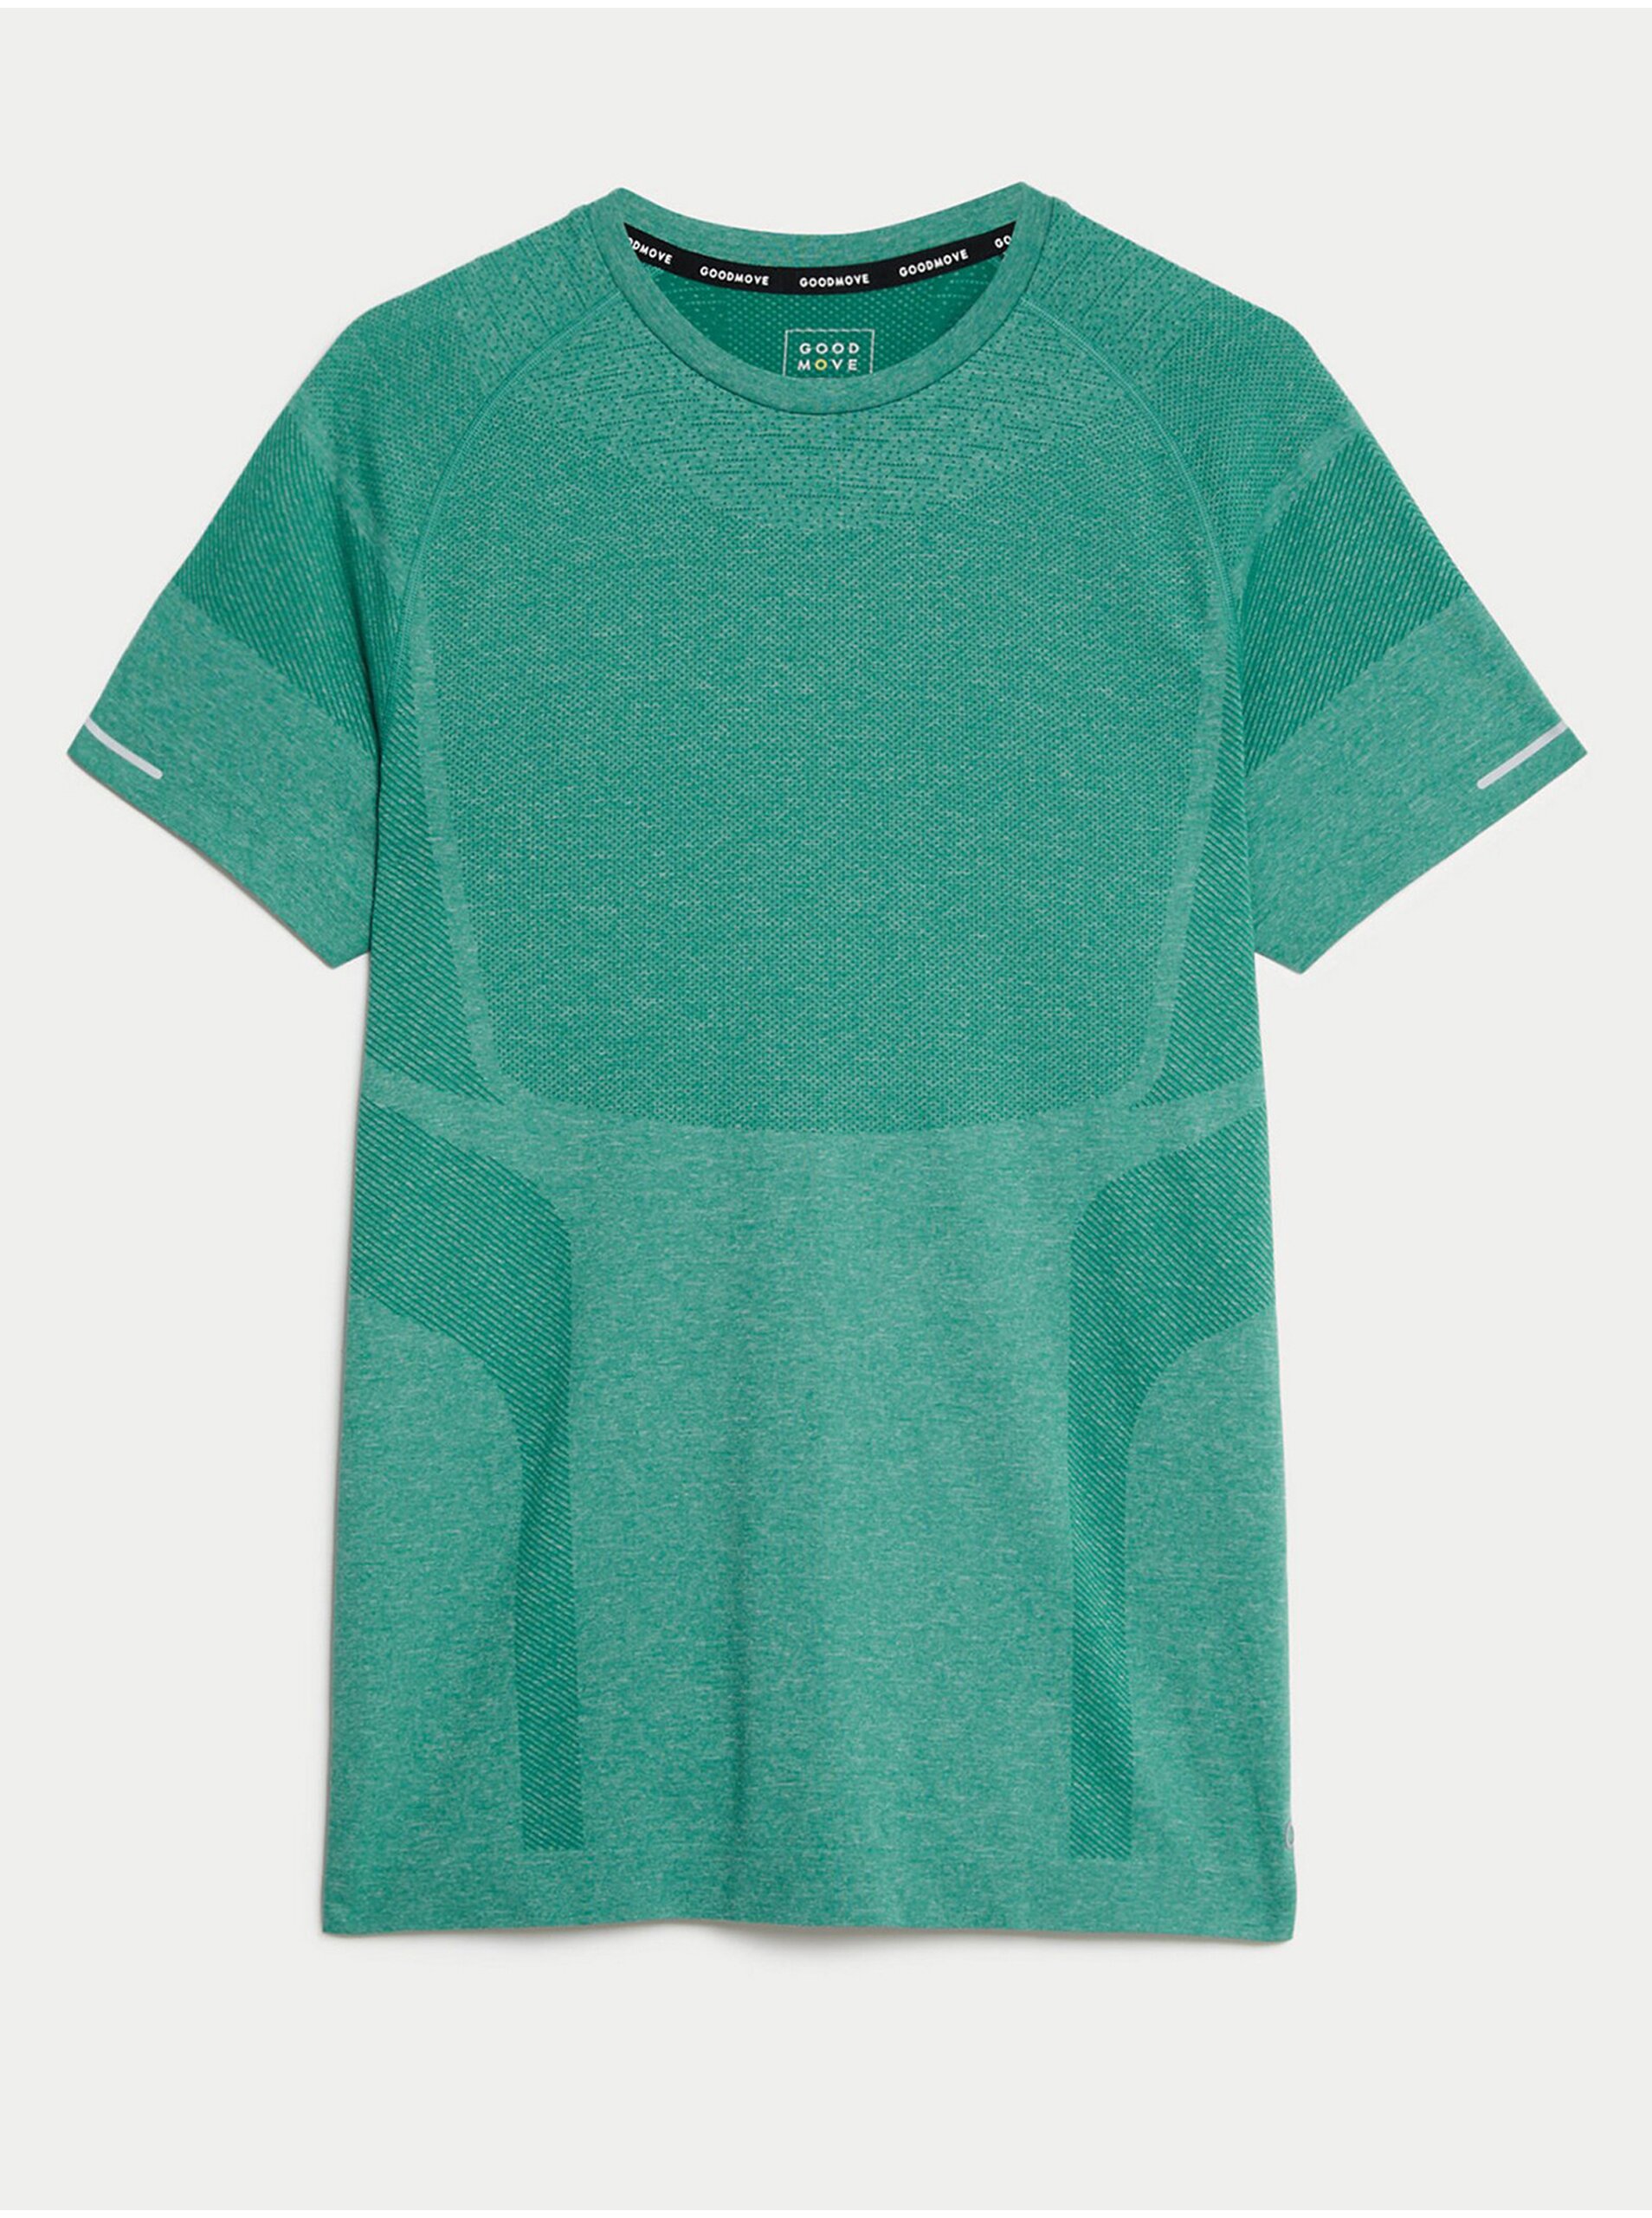 Lacno Zelené pánske športové tričko Marks & Spencer